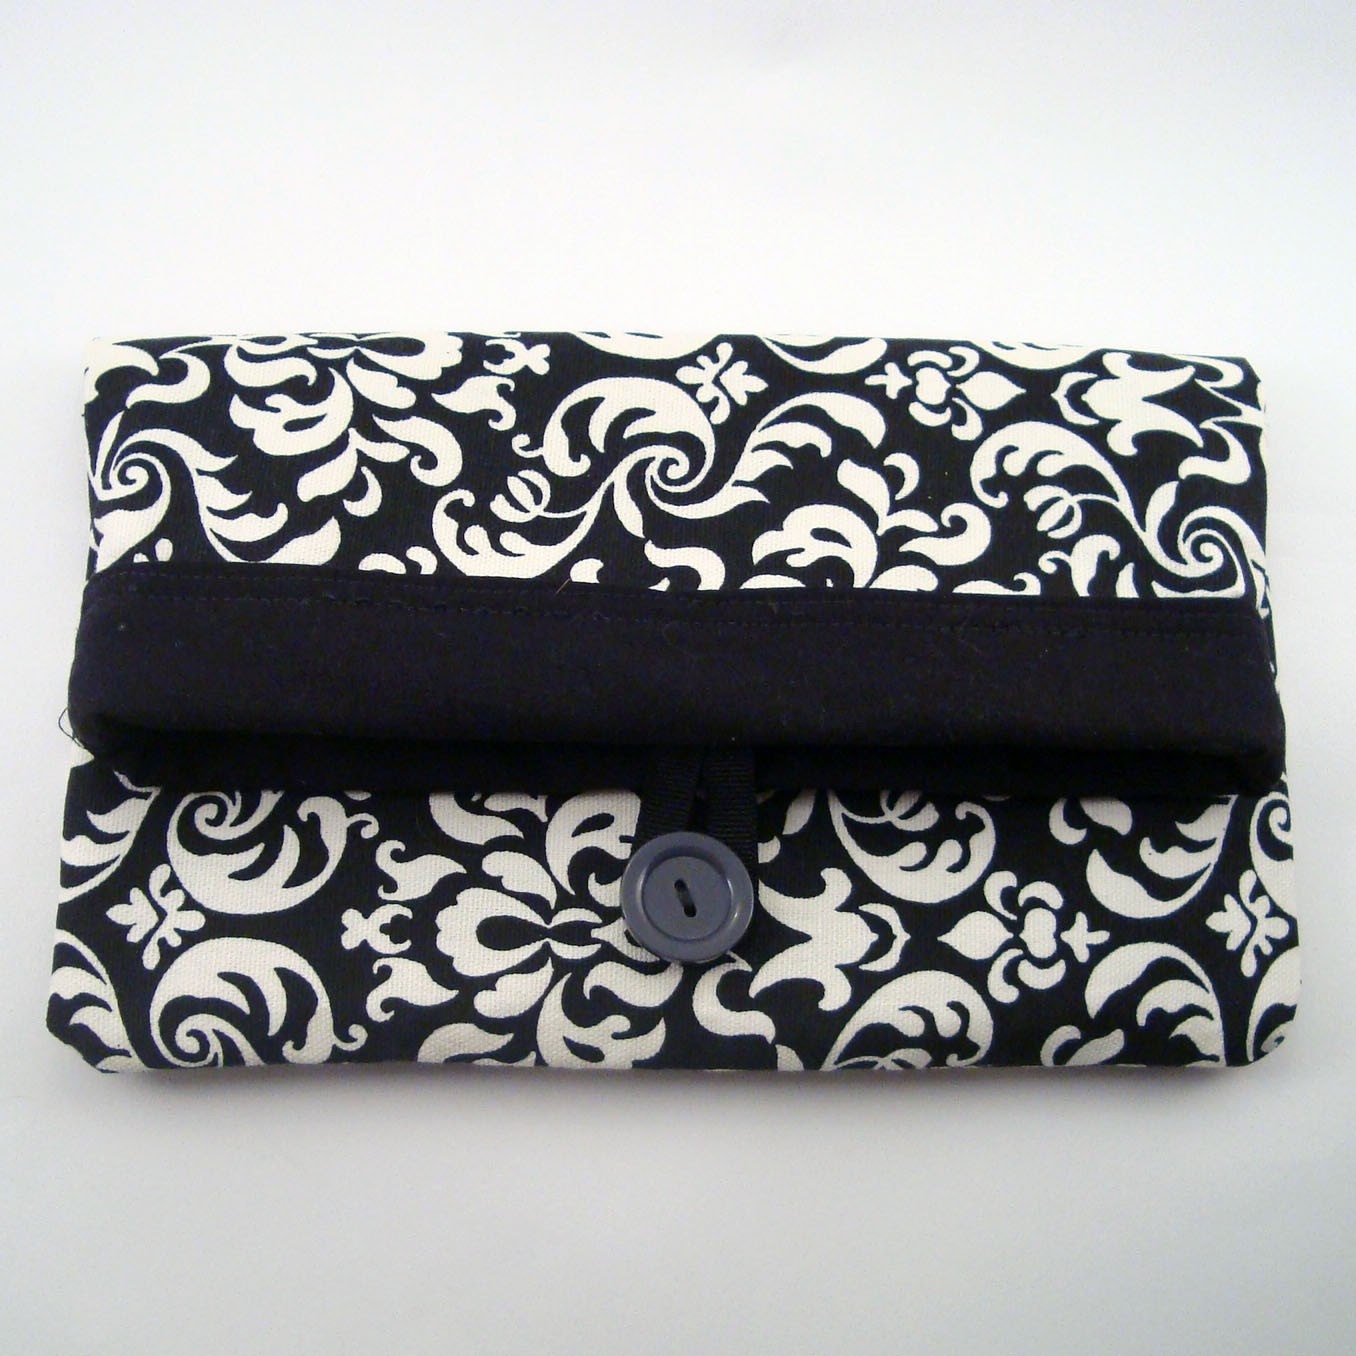 Black and white foldover purse